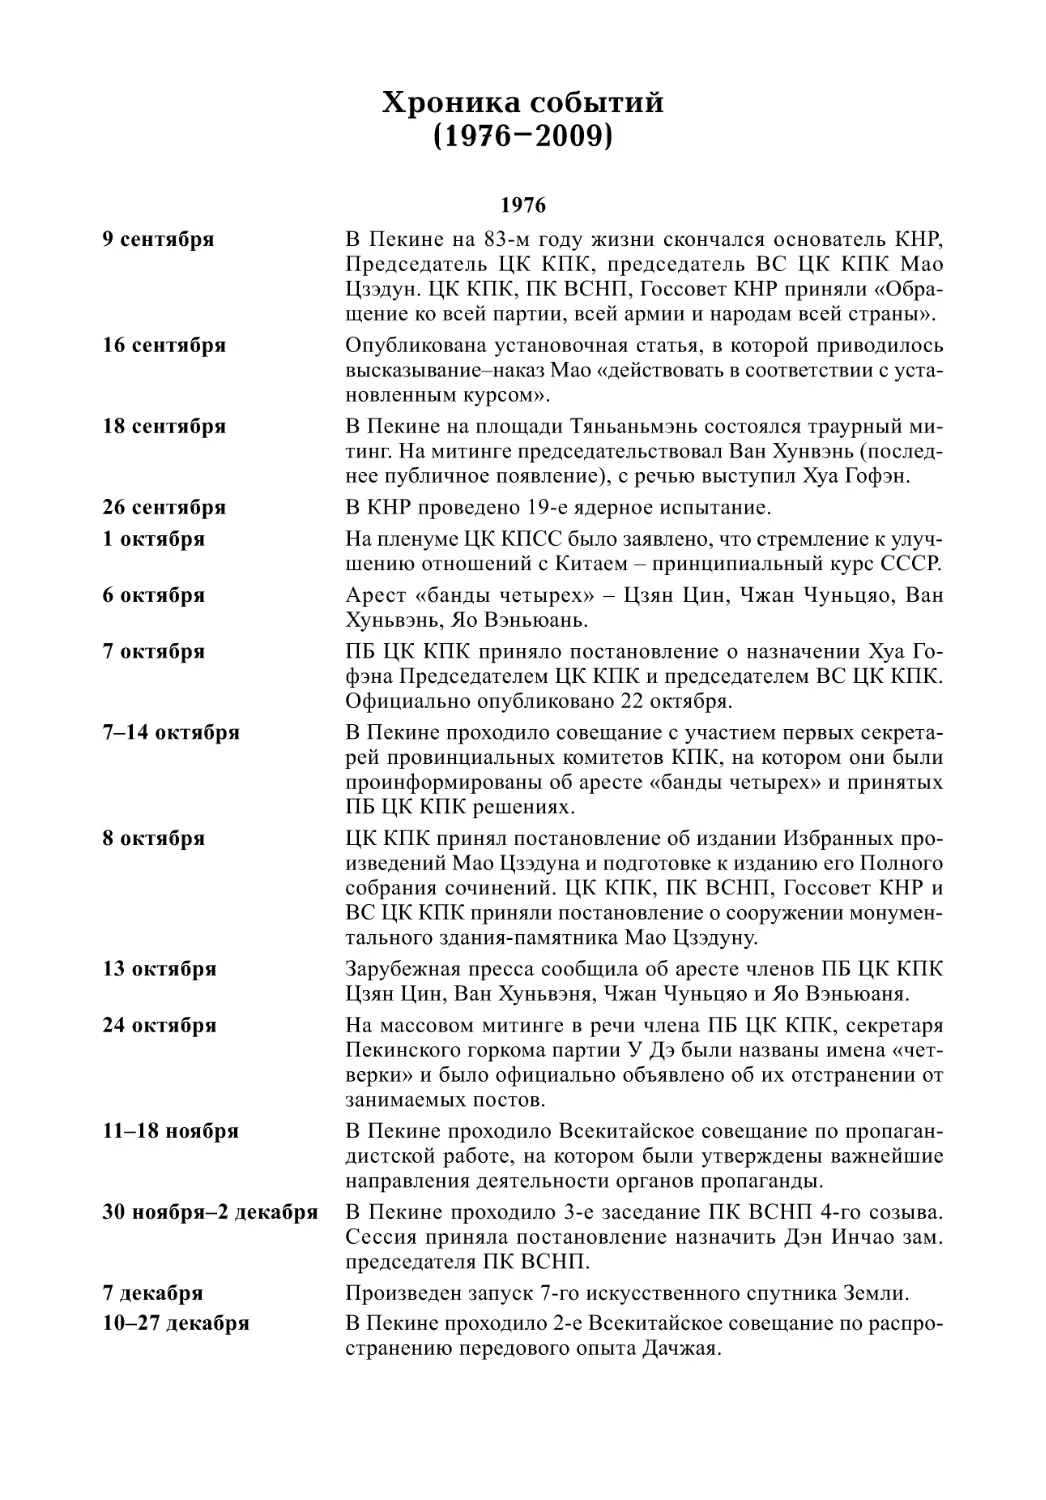 Хроника событий (1976–2009) (Н.Ю. Демидо, Н.И. Мельникова, Ю.Ю. Перепёлкин)